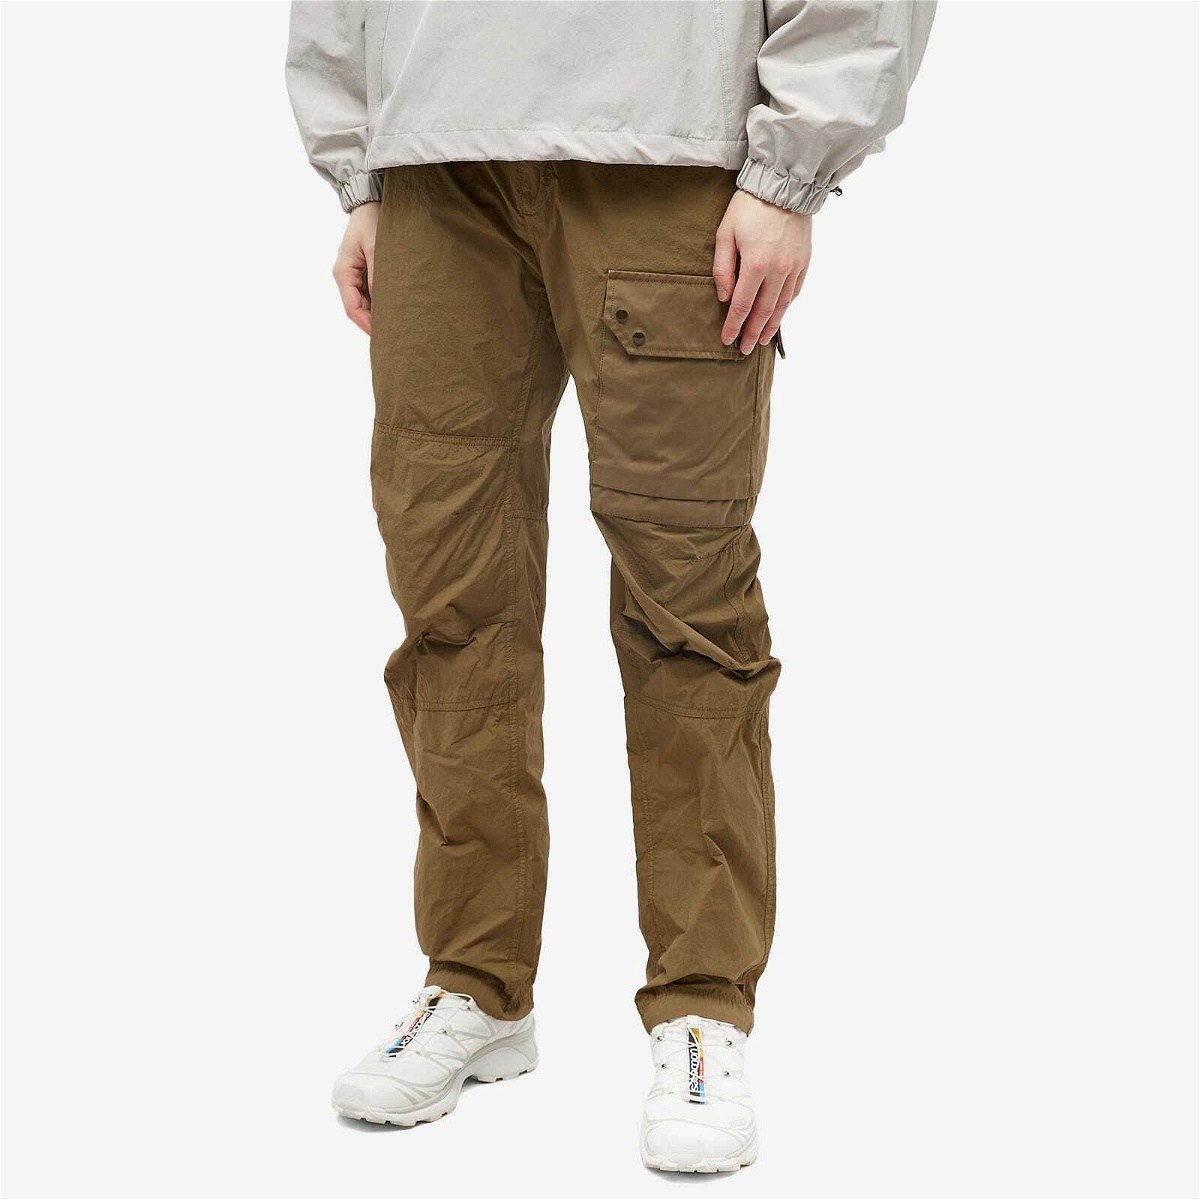 TRGPSG Men's Outdoor Hiking Pants with 10 Pockets Cargo Work Pants,Gary 28  - Walmart.com